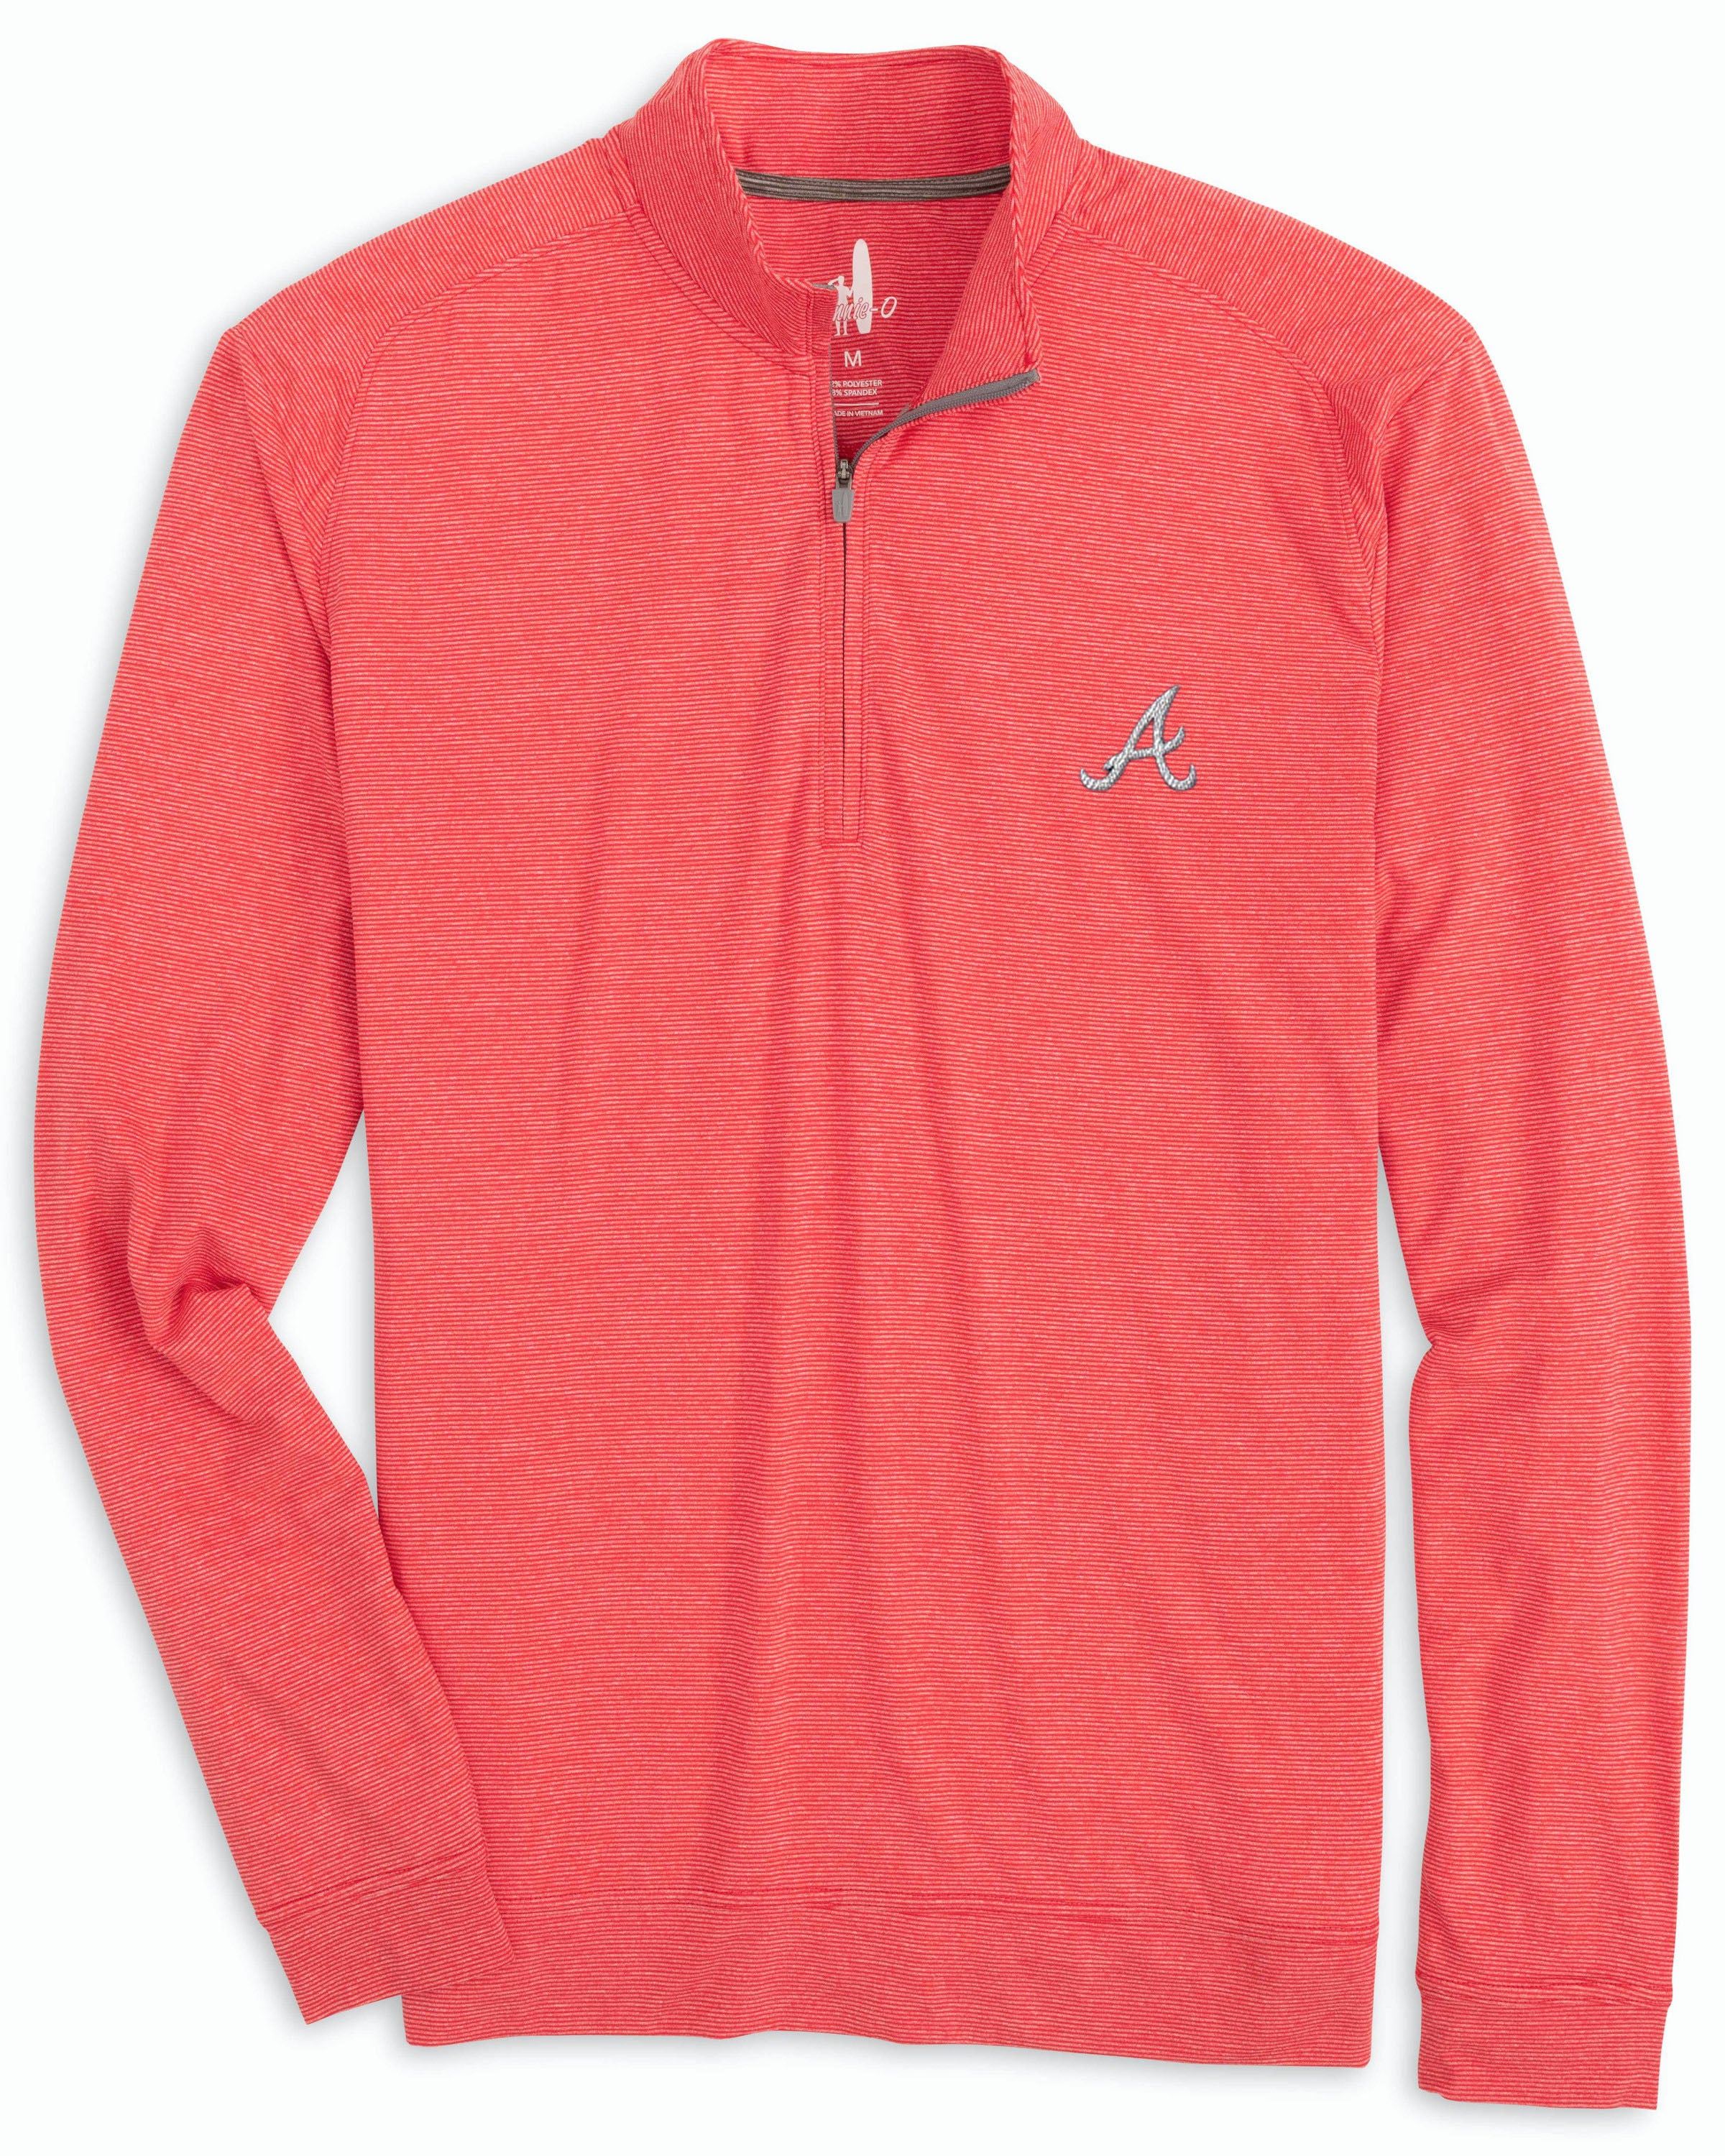 Atlanta Braves Red Letters Sweatshirt Size XL - $45 (43% Off Retail